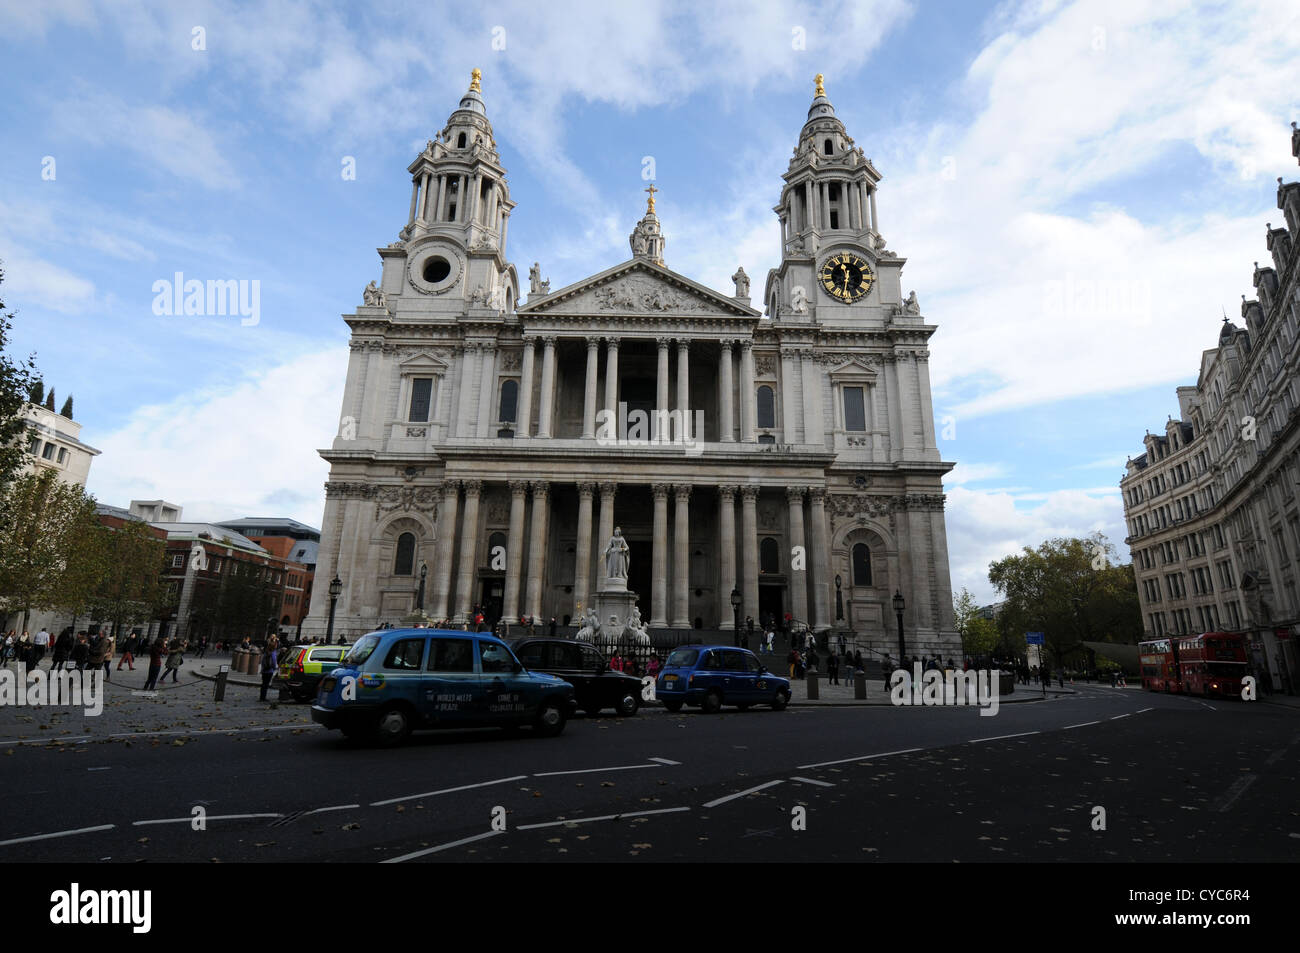 St. Pauls-Kathedrale von St. Paul Kirchhof mit London Taxis. Stockfoto